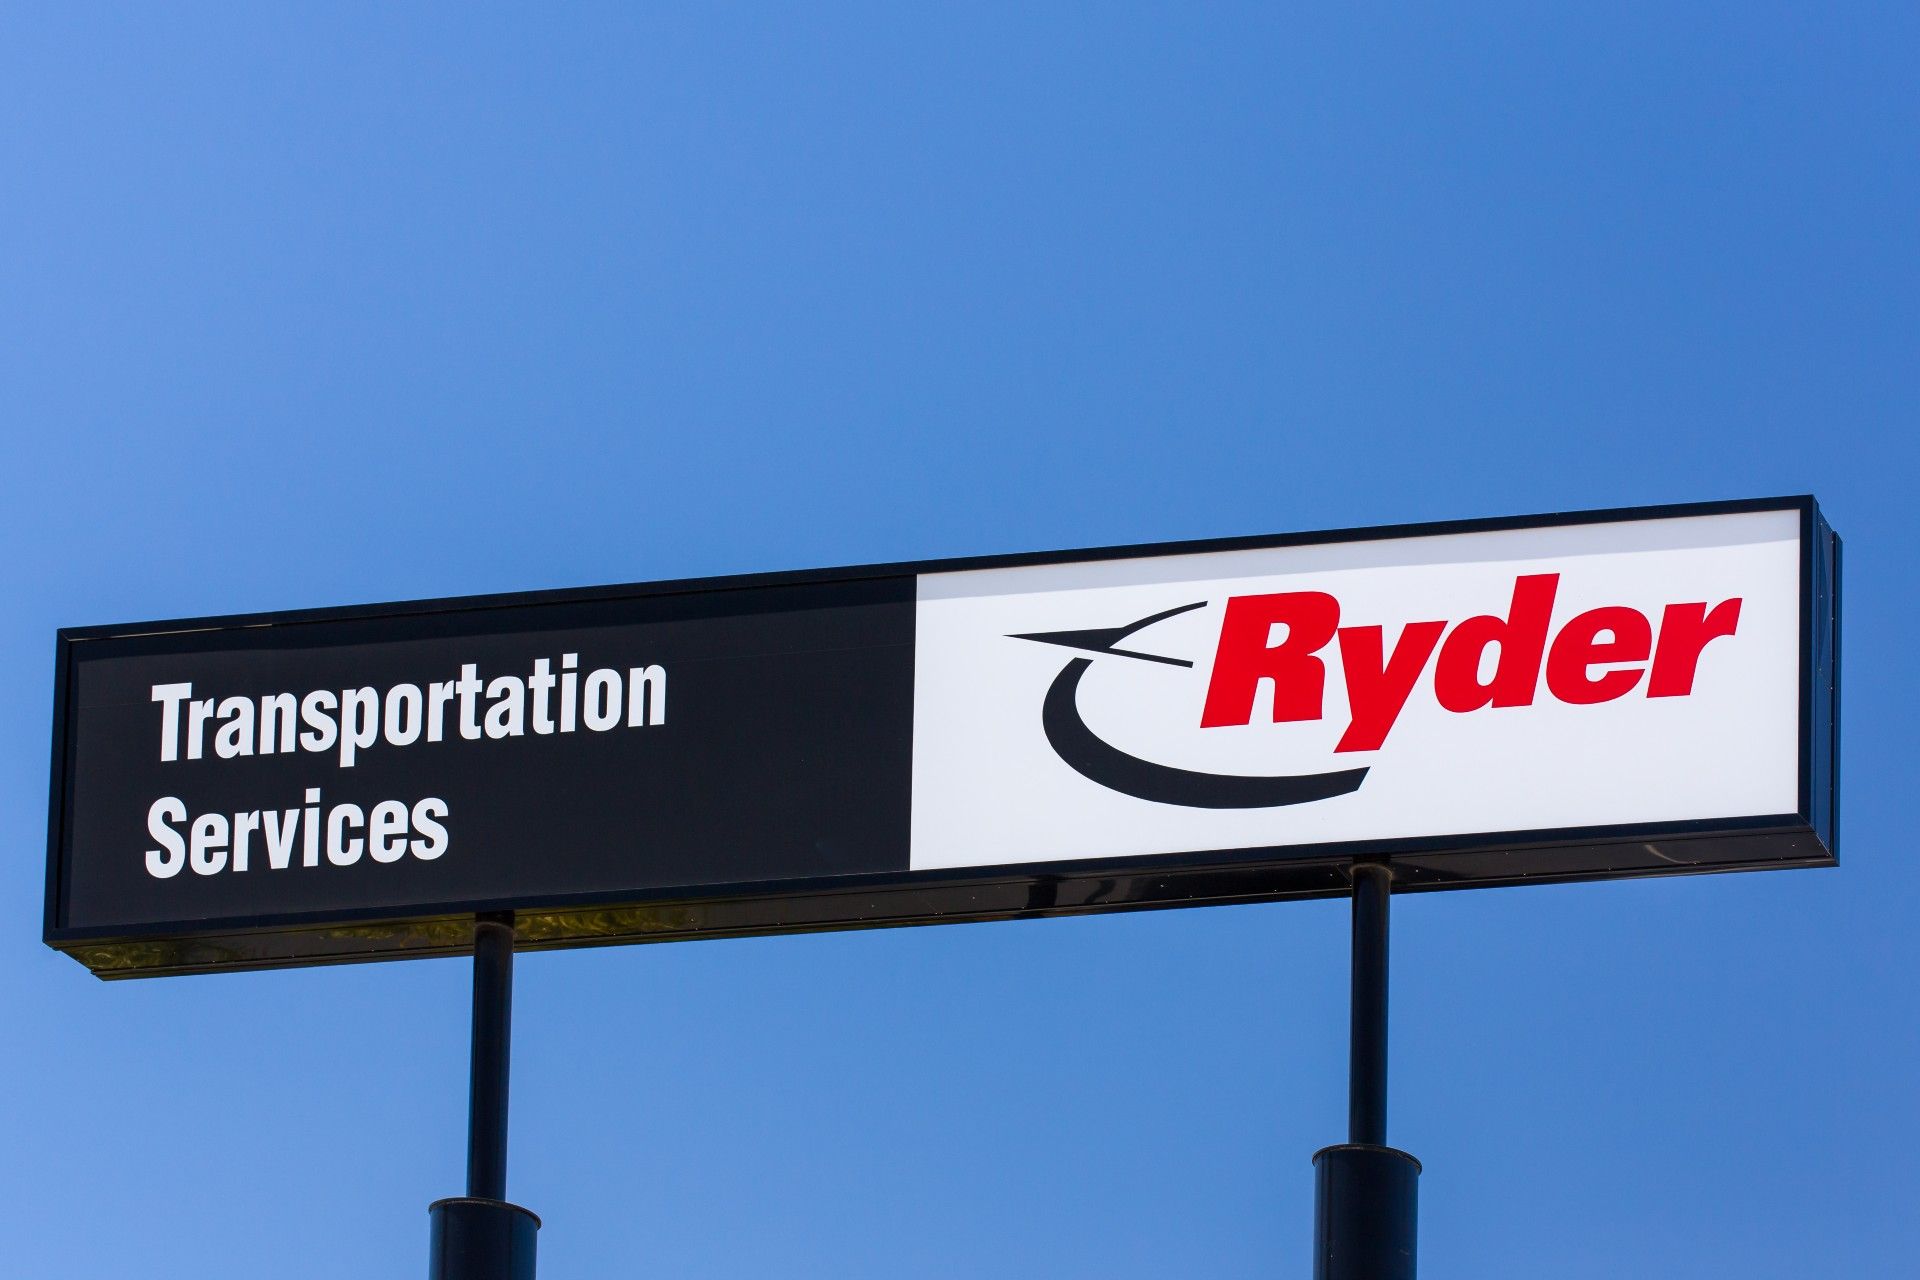 Ryder Transportation Services sign against a blue sky - delivery drivers